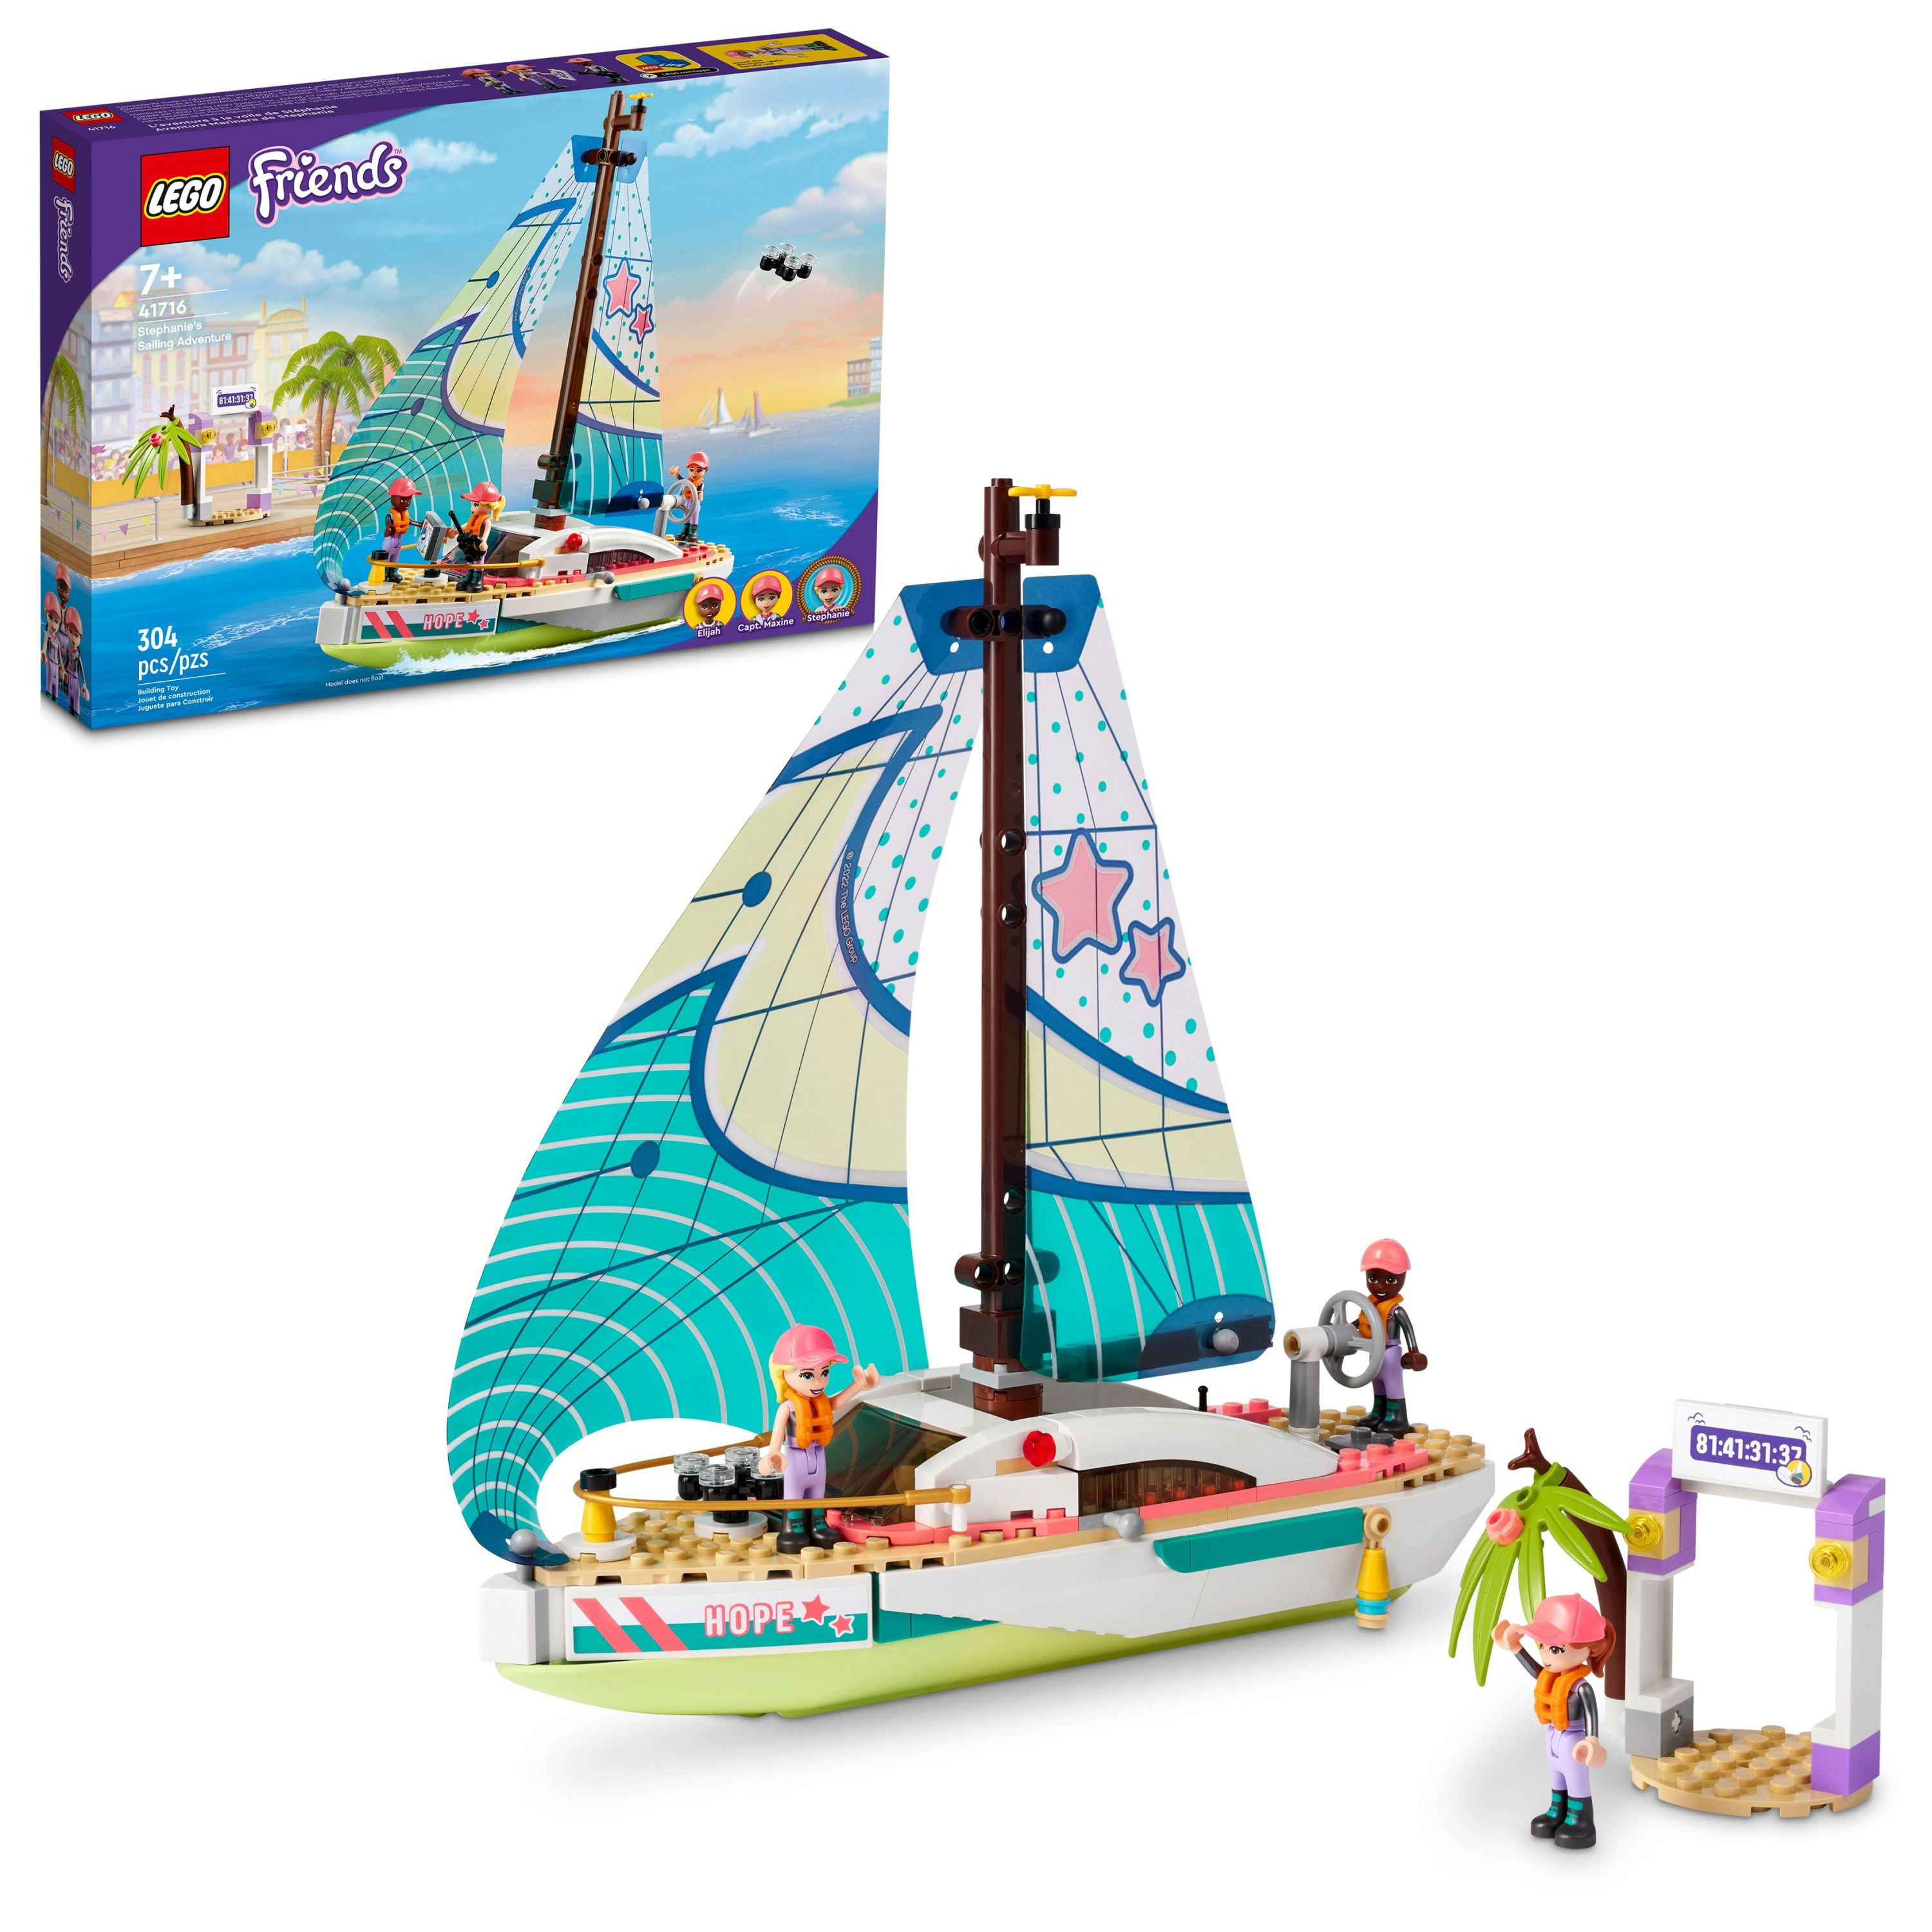 Lego ® Star Wars ™ Series 1 TRADING CARDS CARD 24-Sailing Barque r2-d2 